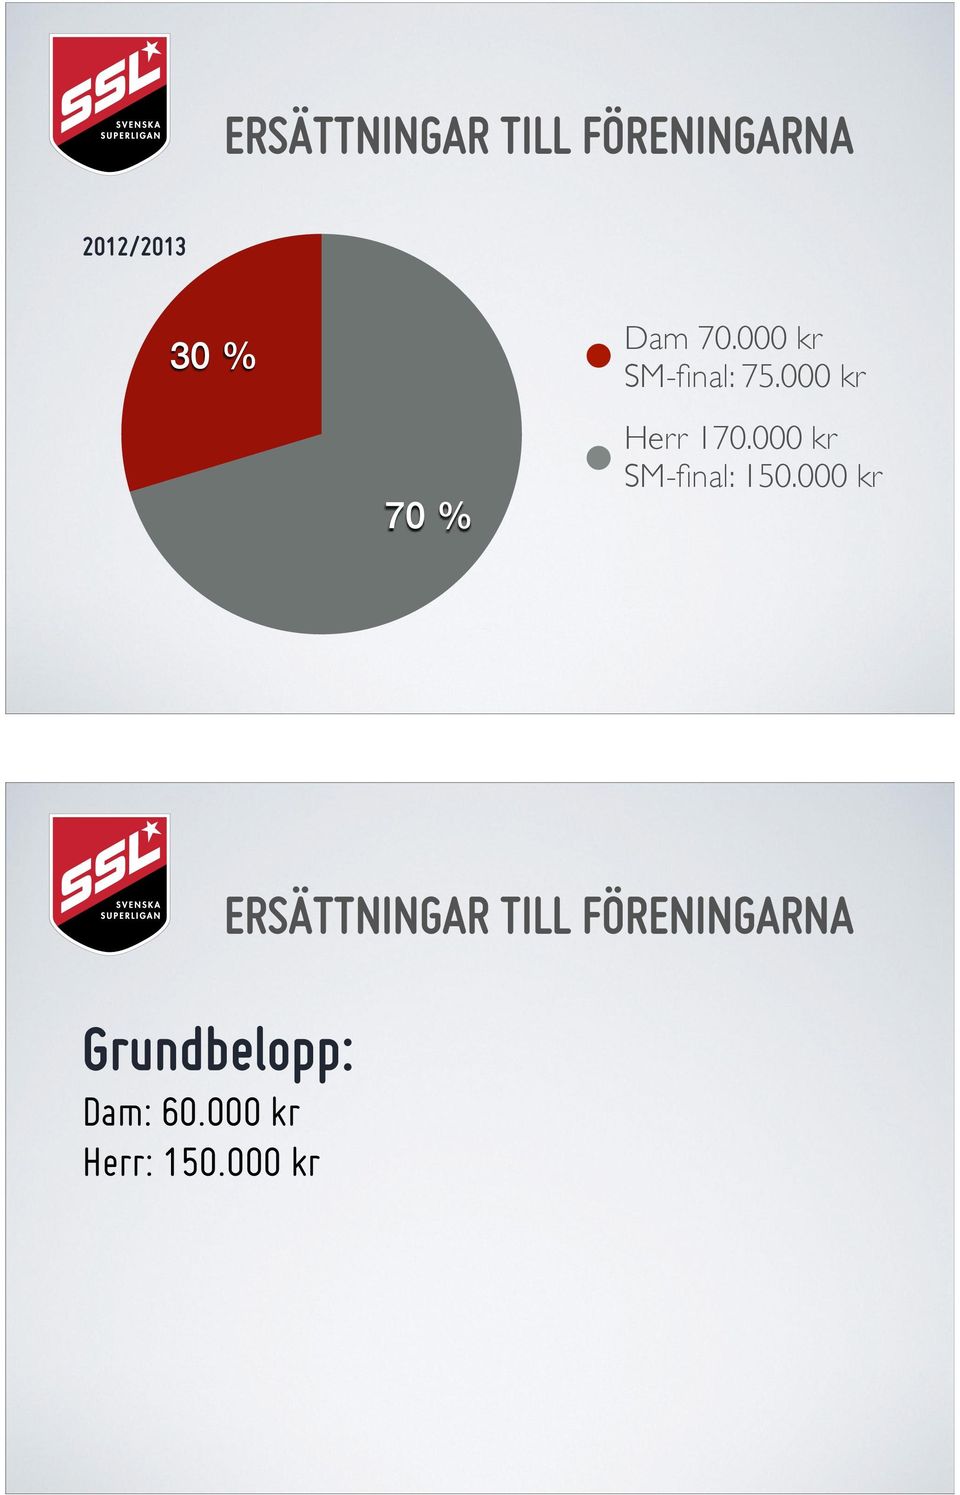 000 kr SM-final: 150.000 kr Grundbelopp: Dam: 60.